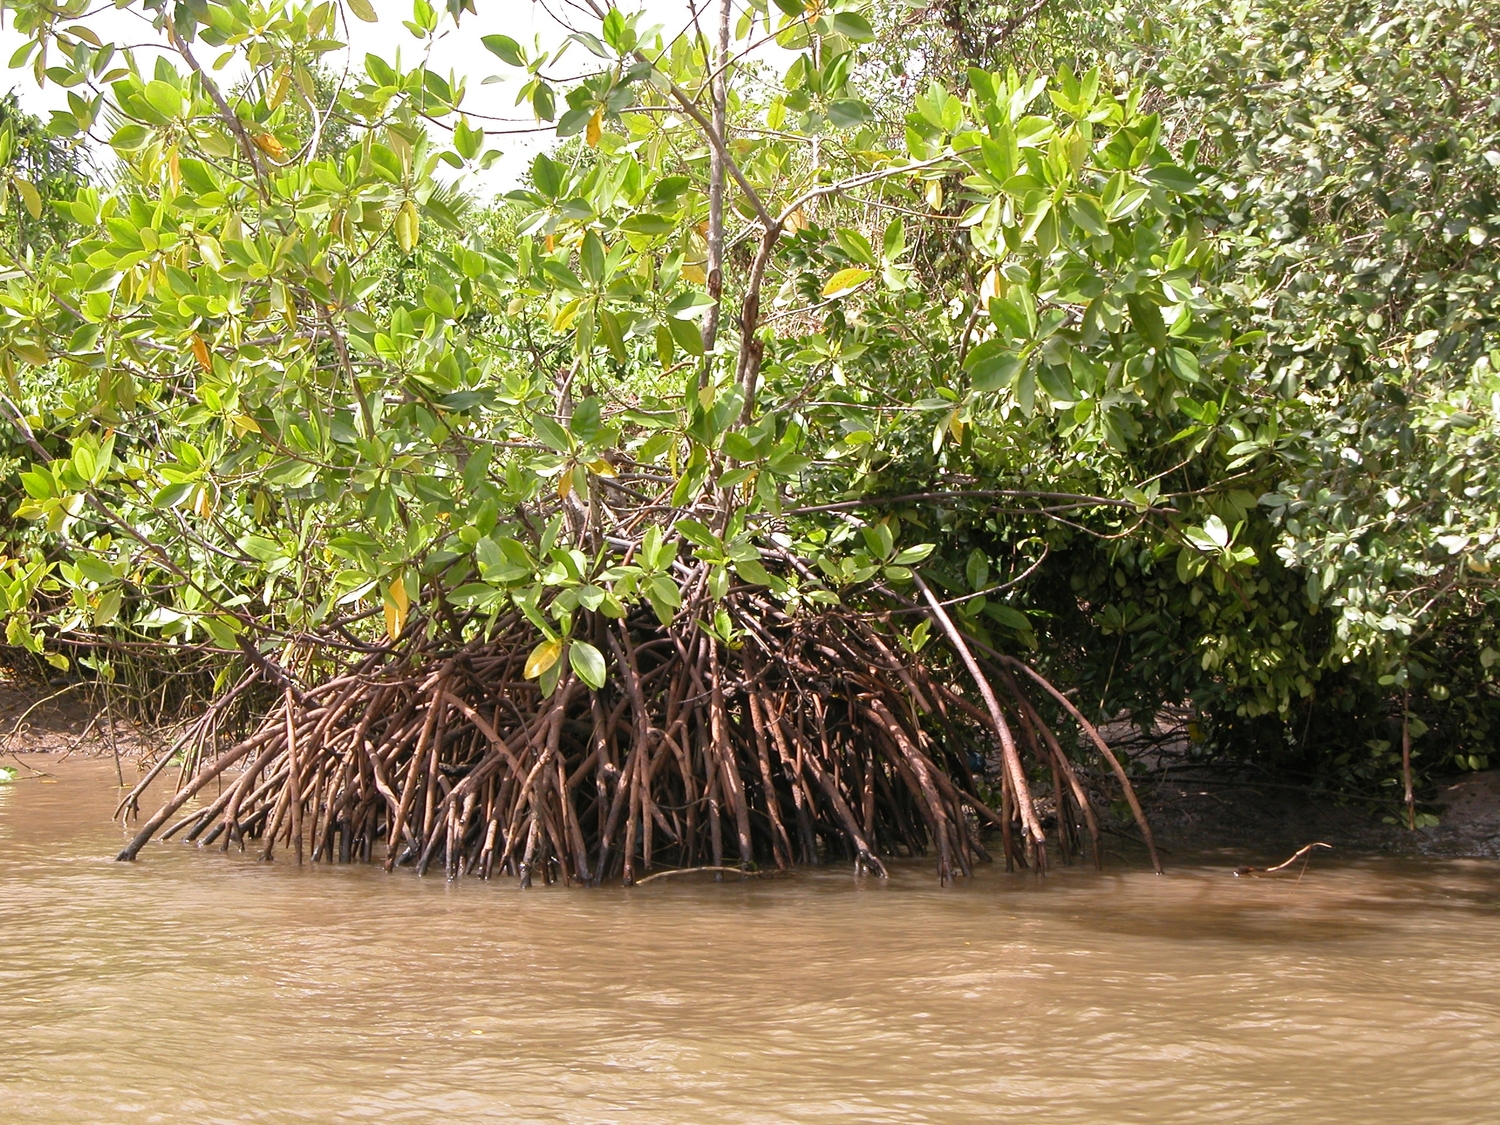 Mangroves growing around the edge of the Segara Anakan Lagoon in Java, Indonesia